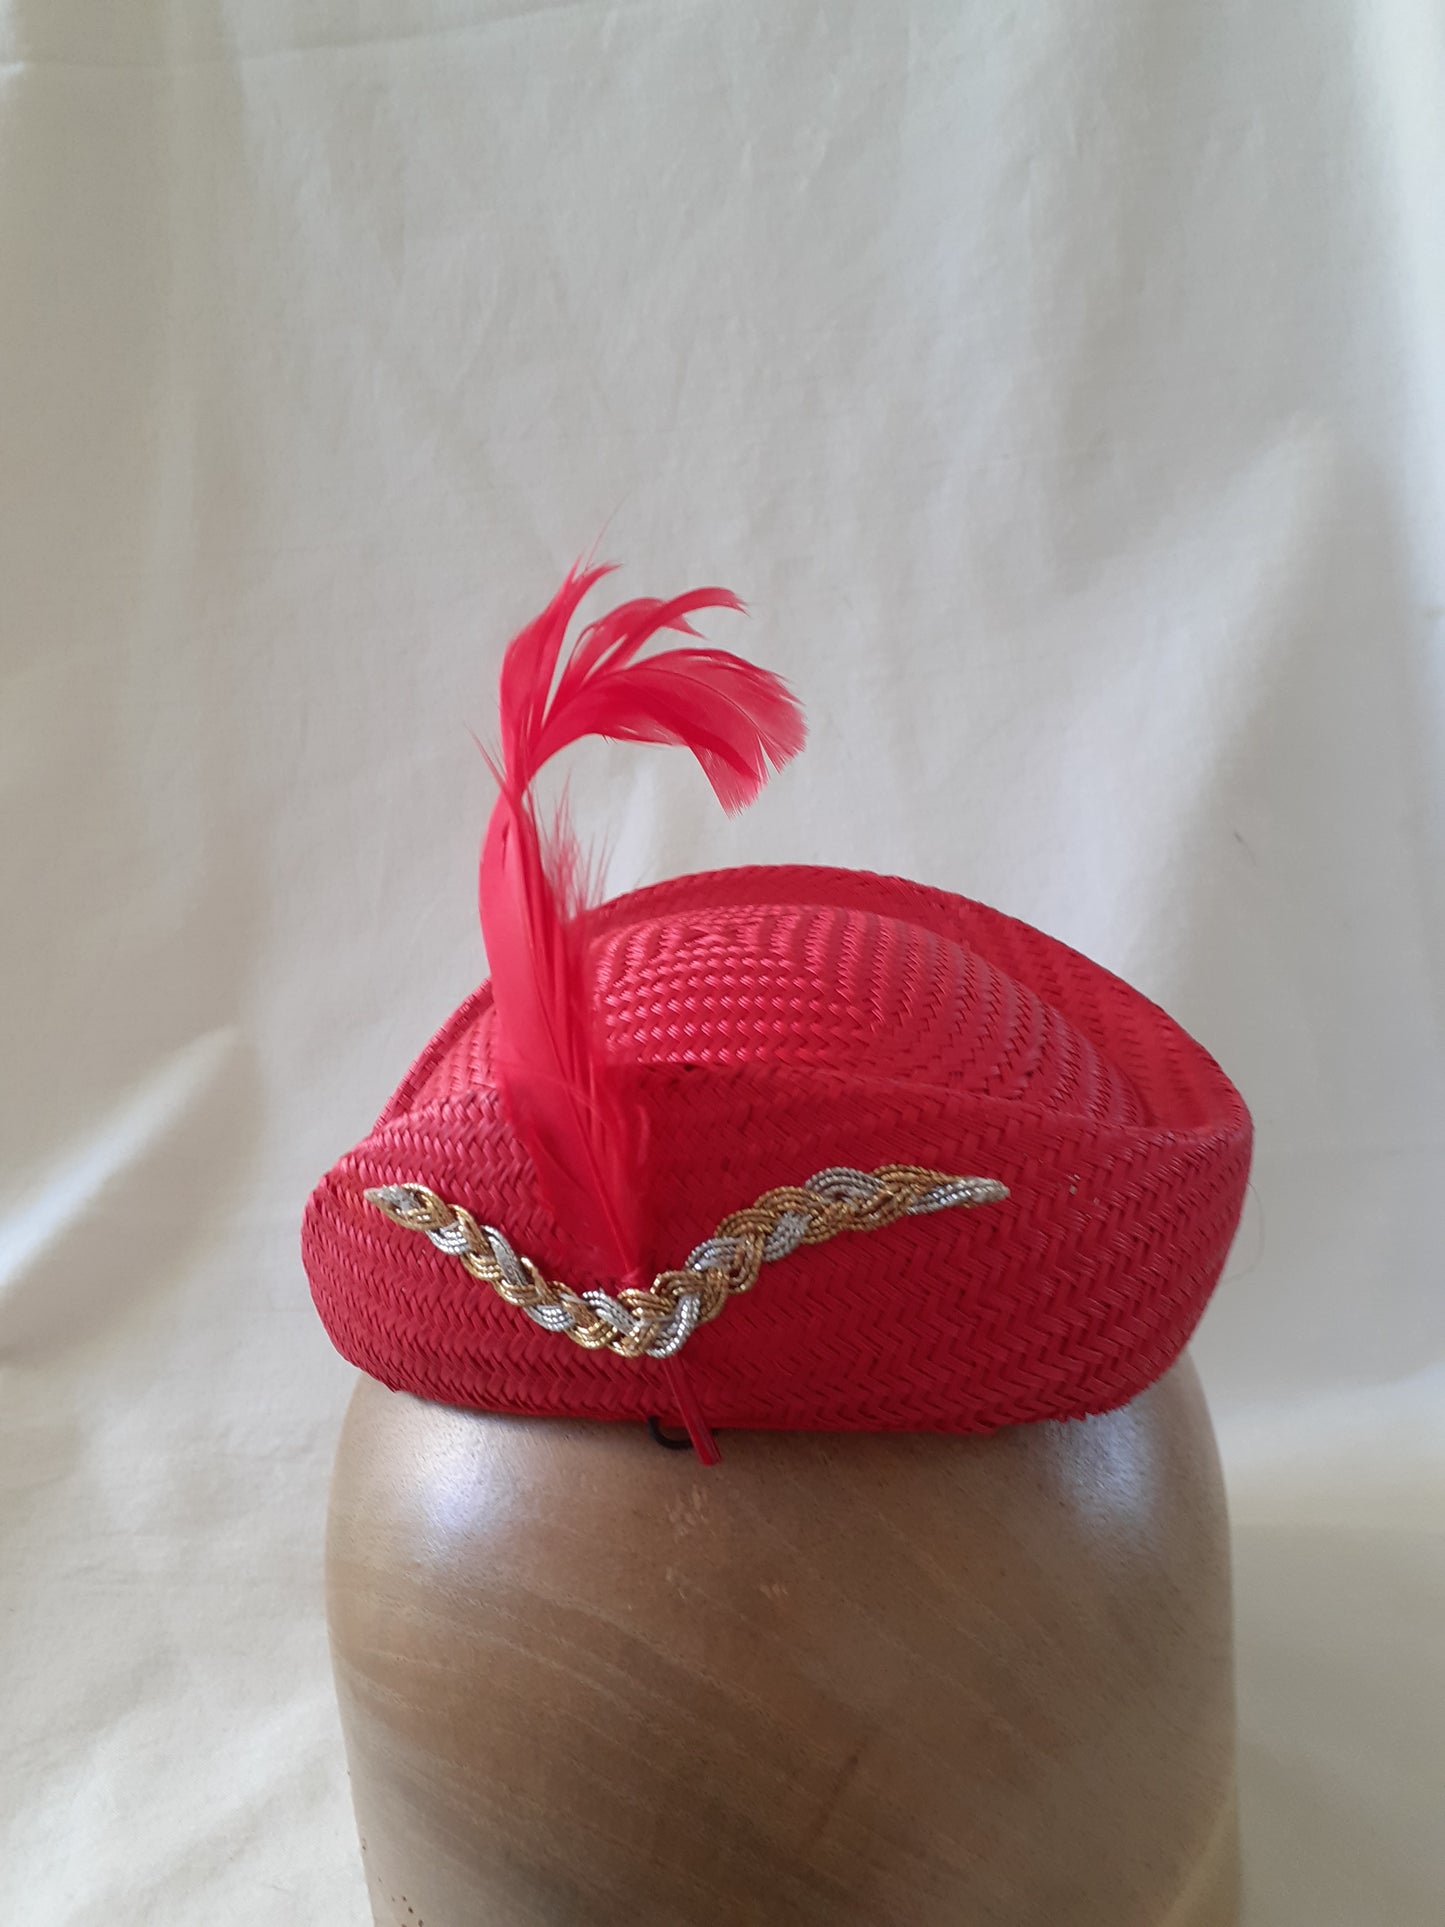 Red 'air hostess' hat